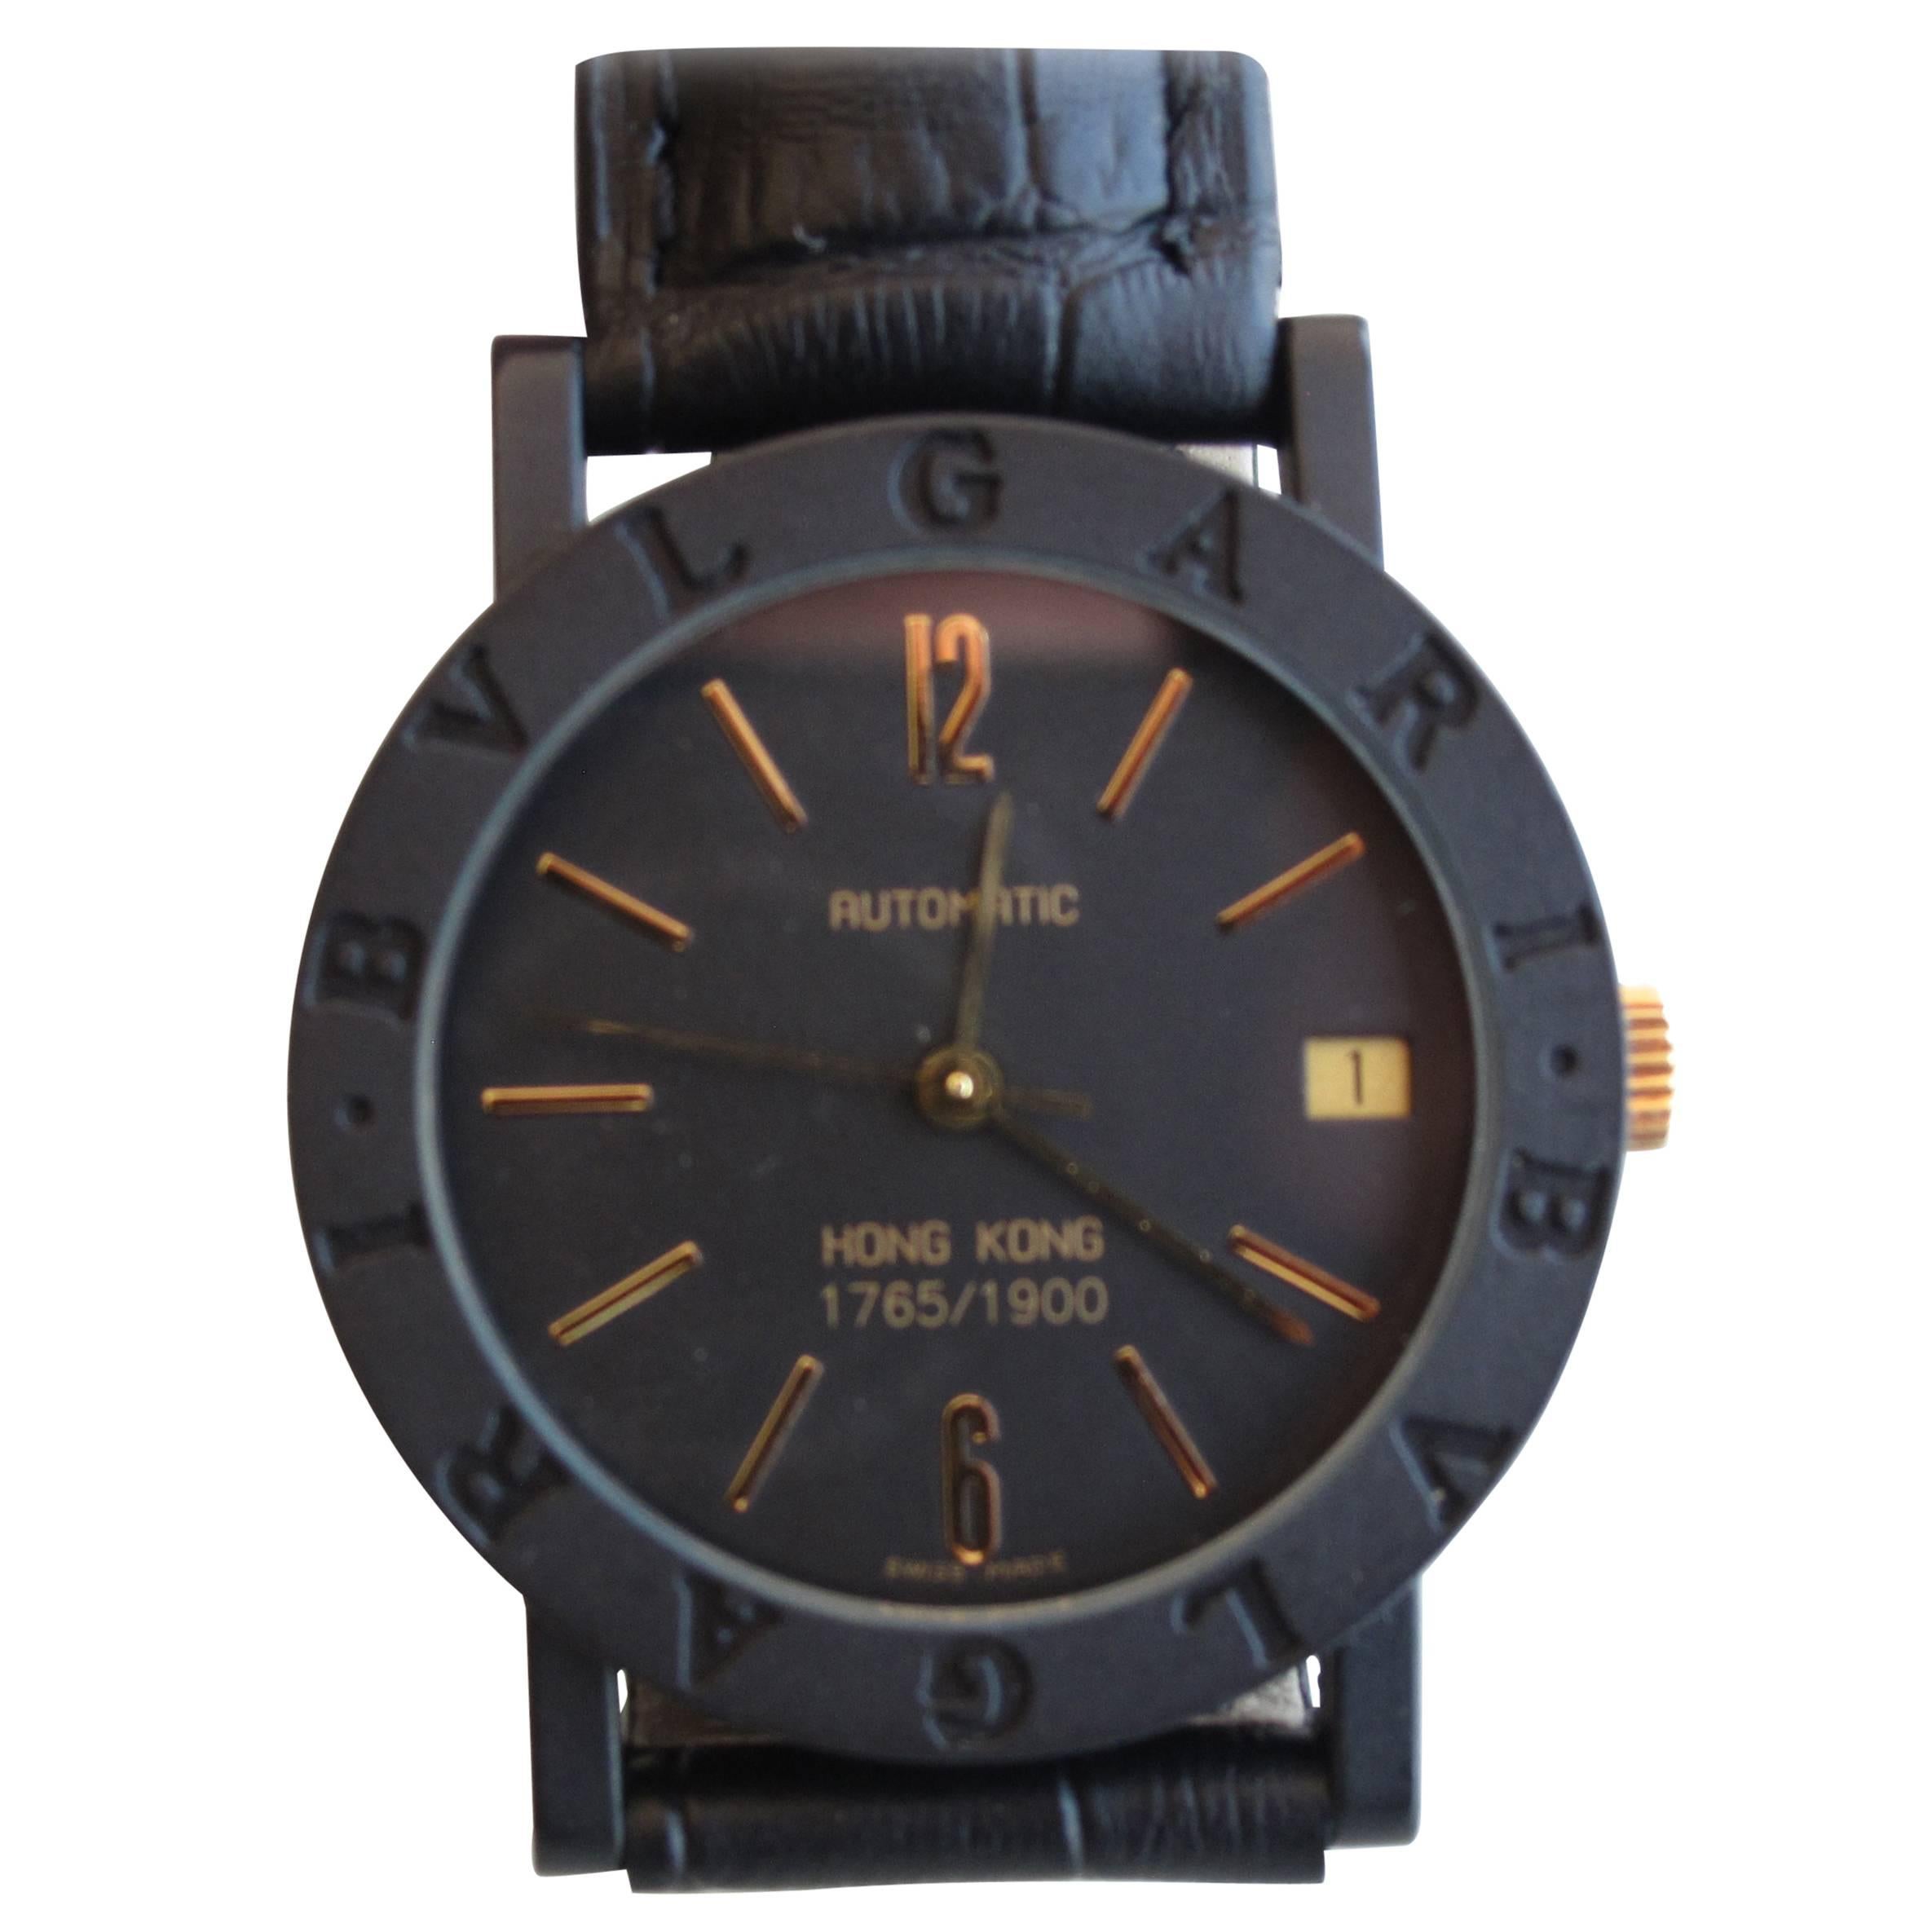 Bulgari Carbongold Limited Edition Hong Kong Automatic Watch